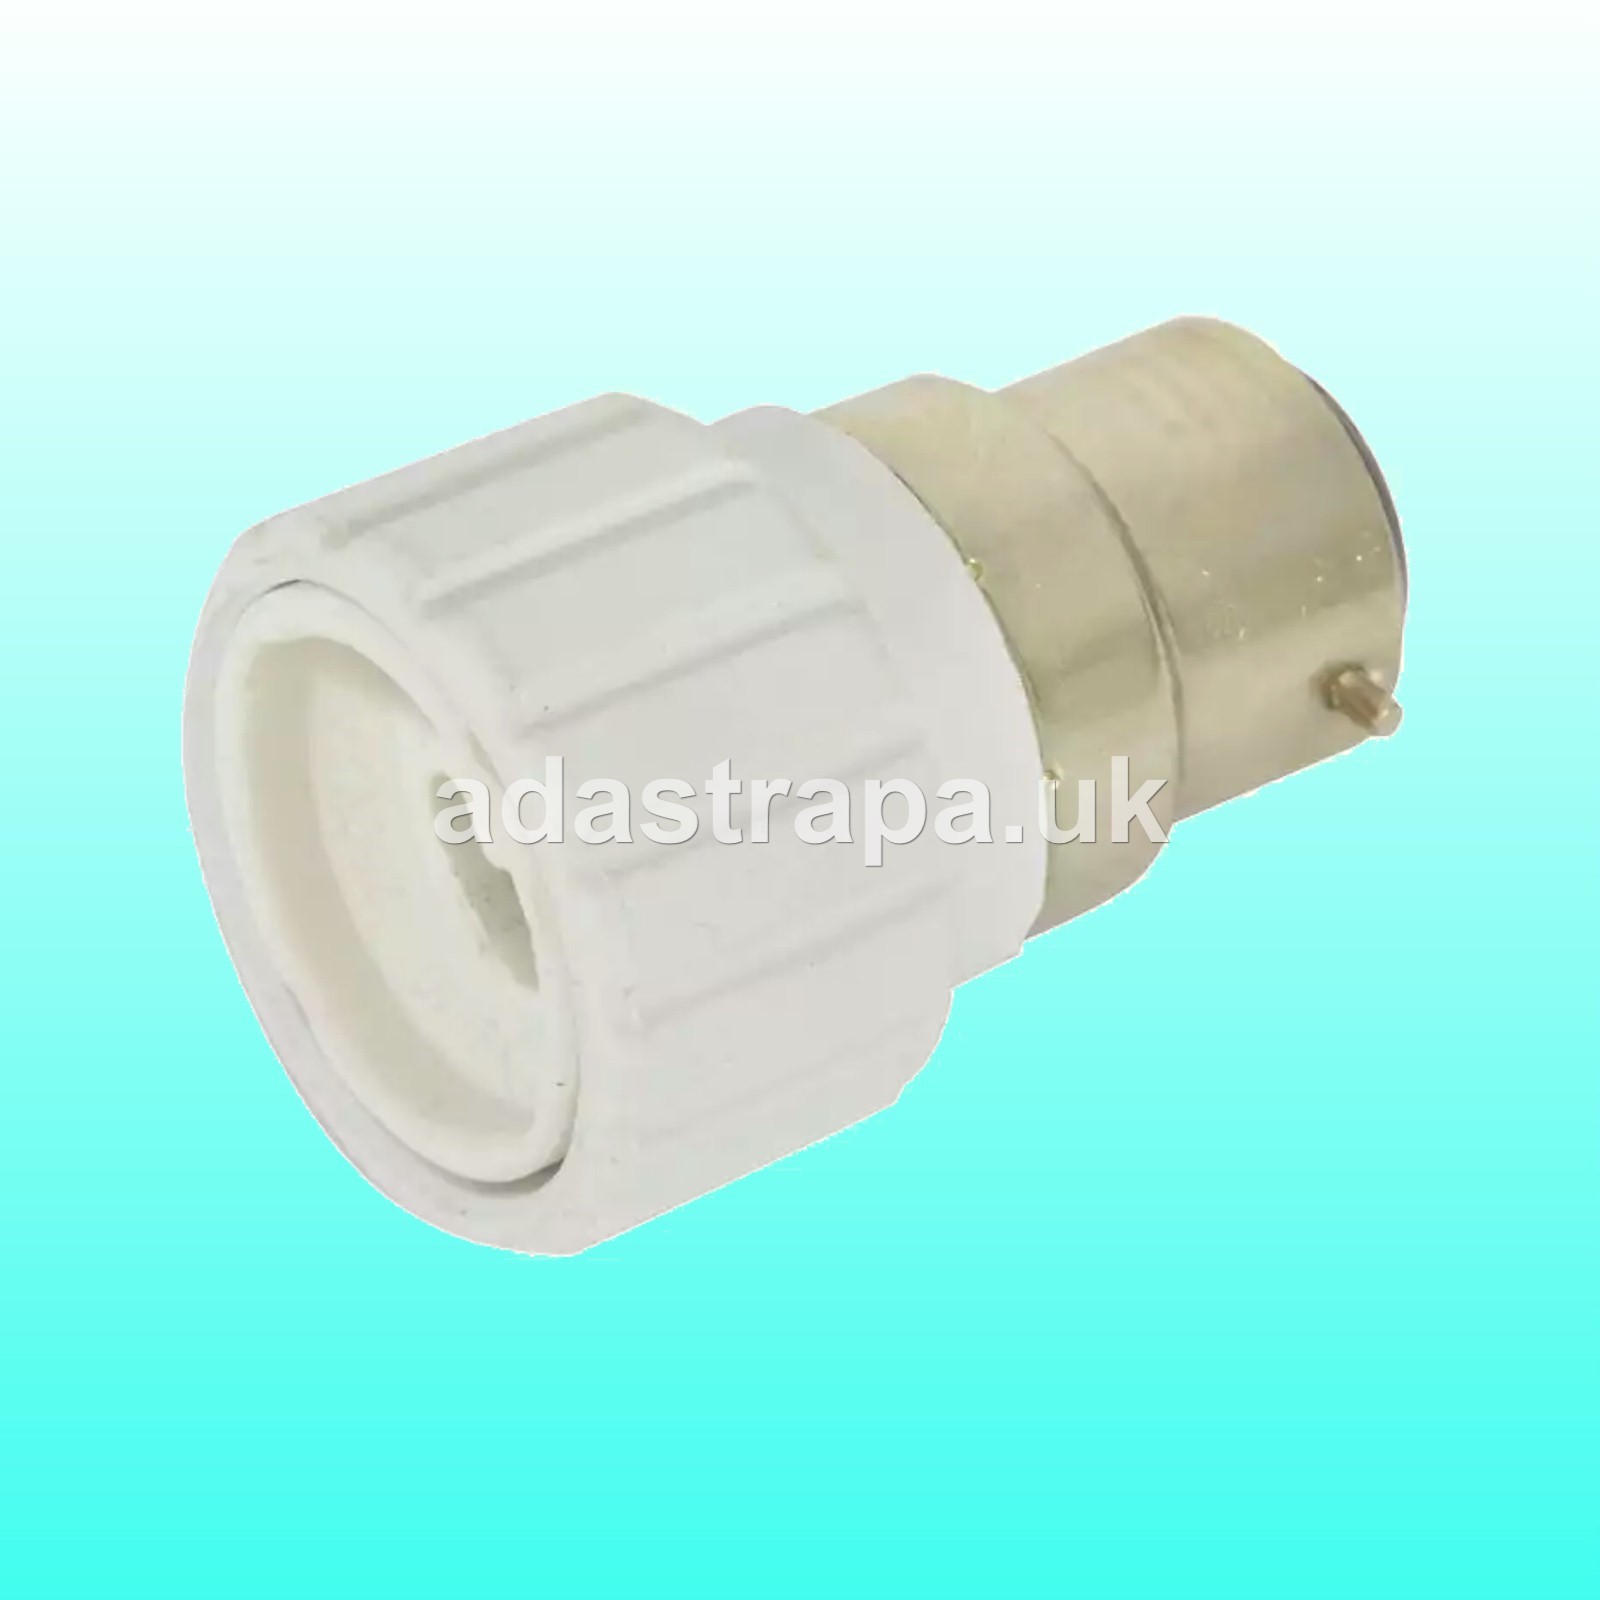 Lyyt 401.091UK Lamp Socket Converter B22 - GU10 - 401.091UK